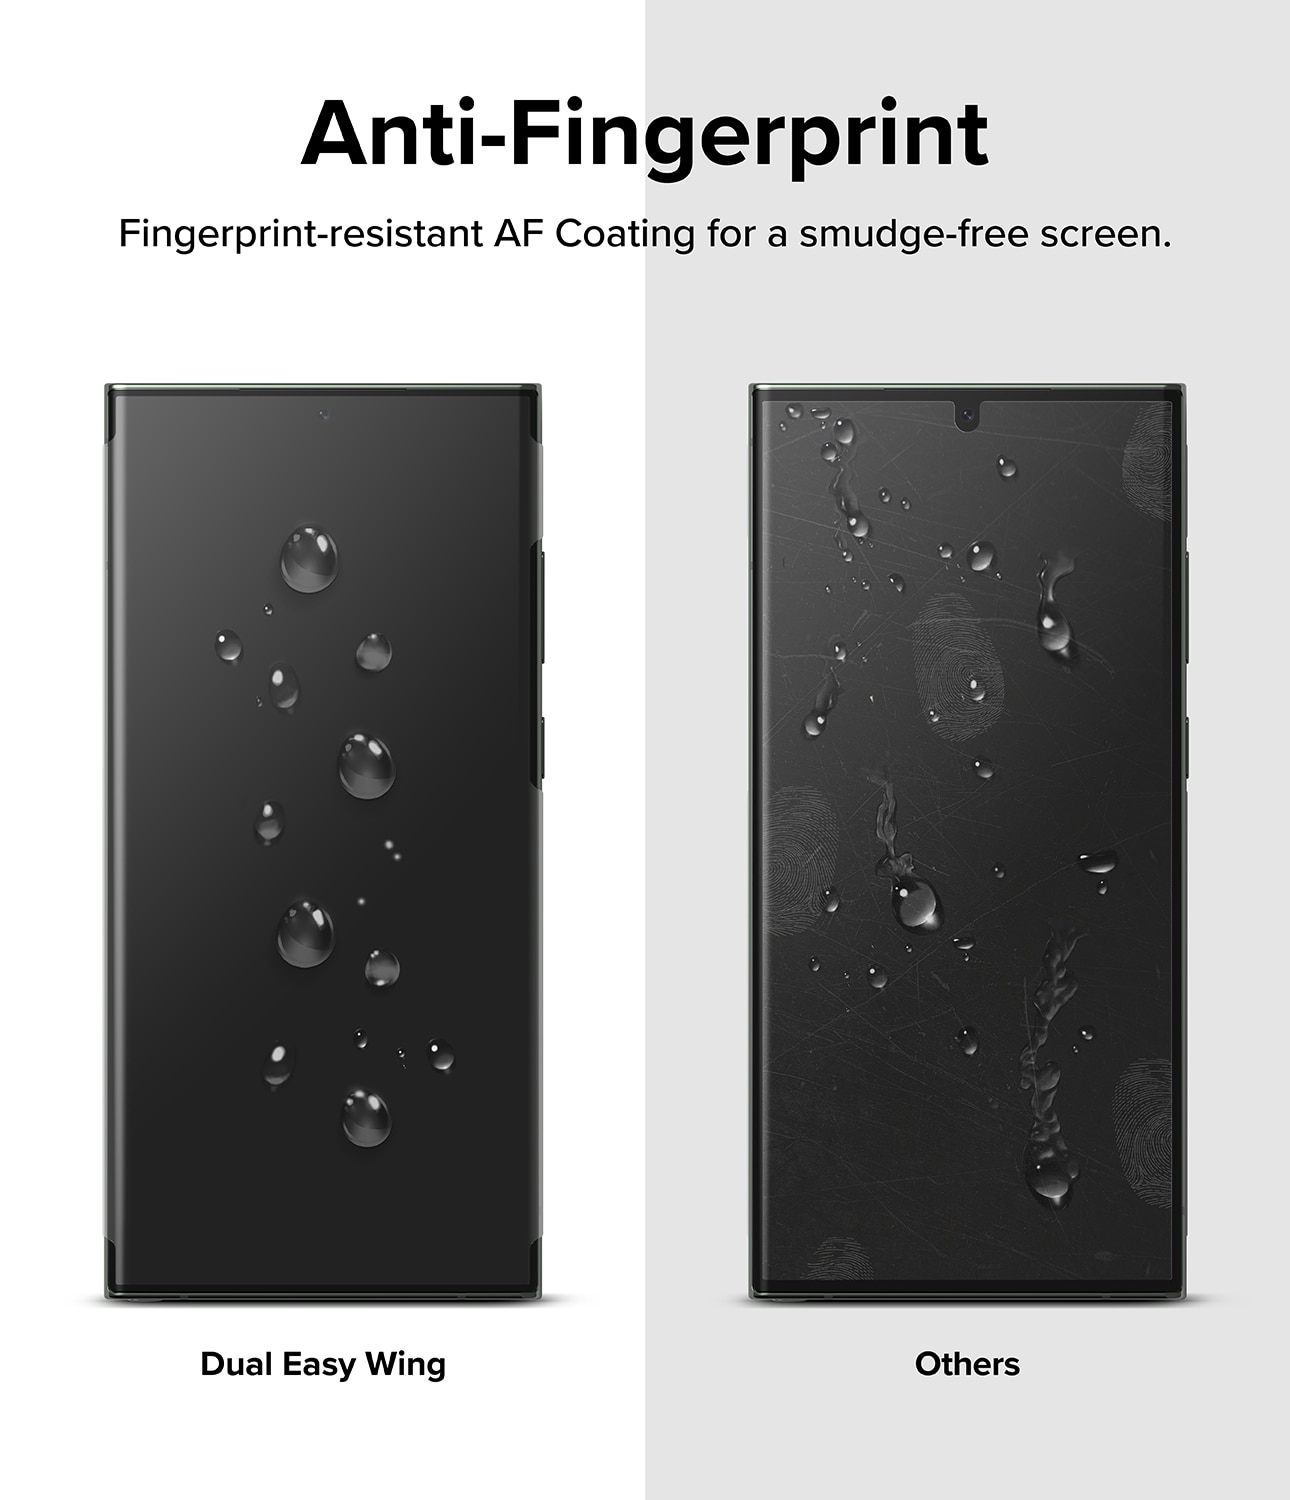 Samsung Galaxy S23 Ultra Skärmskydd skyddsfilm - Dual Easy Wing (2-pack)